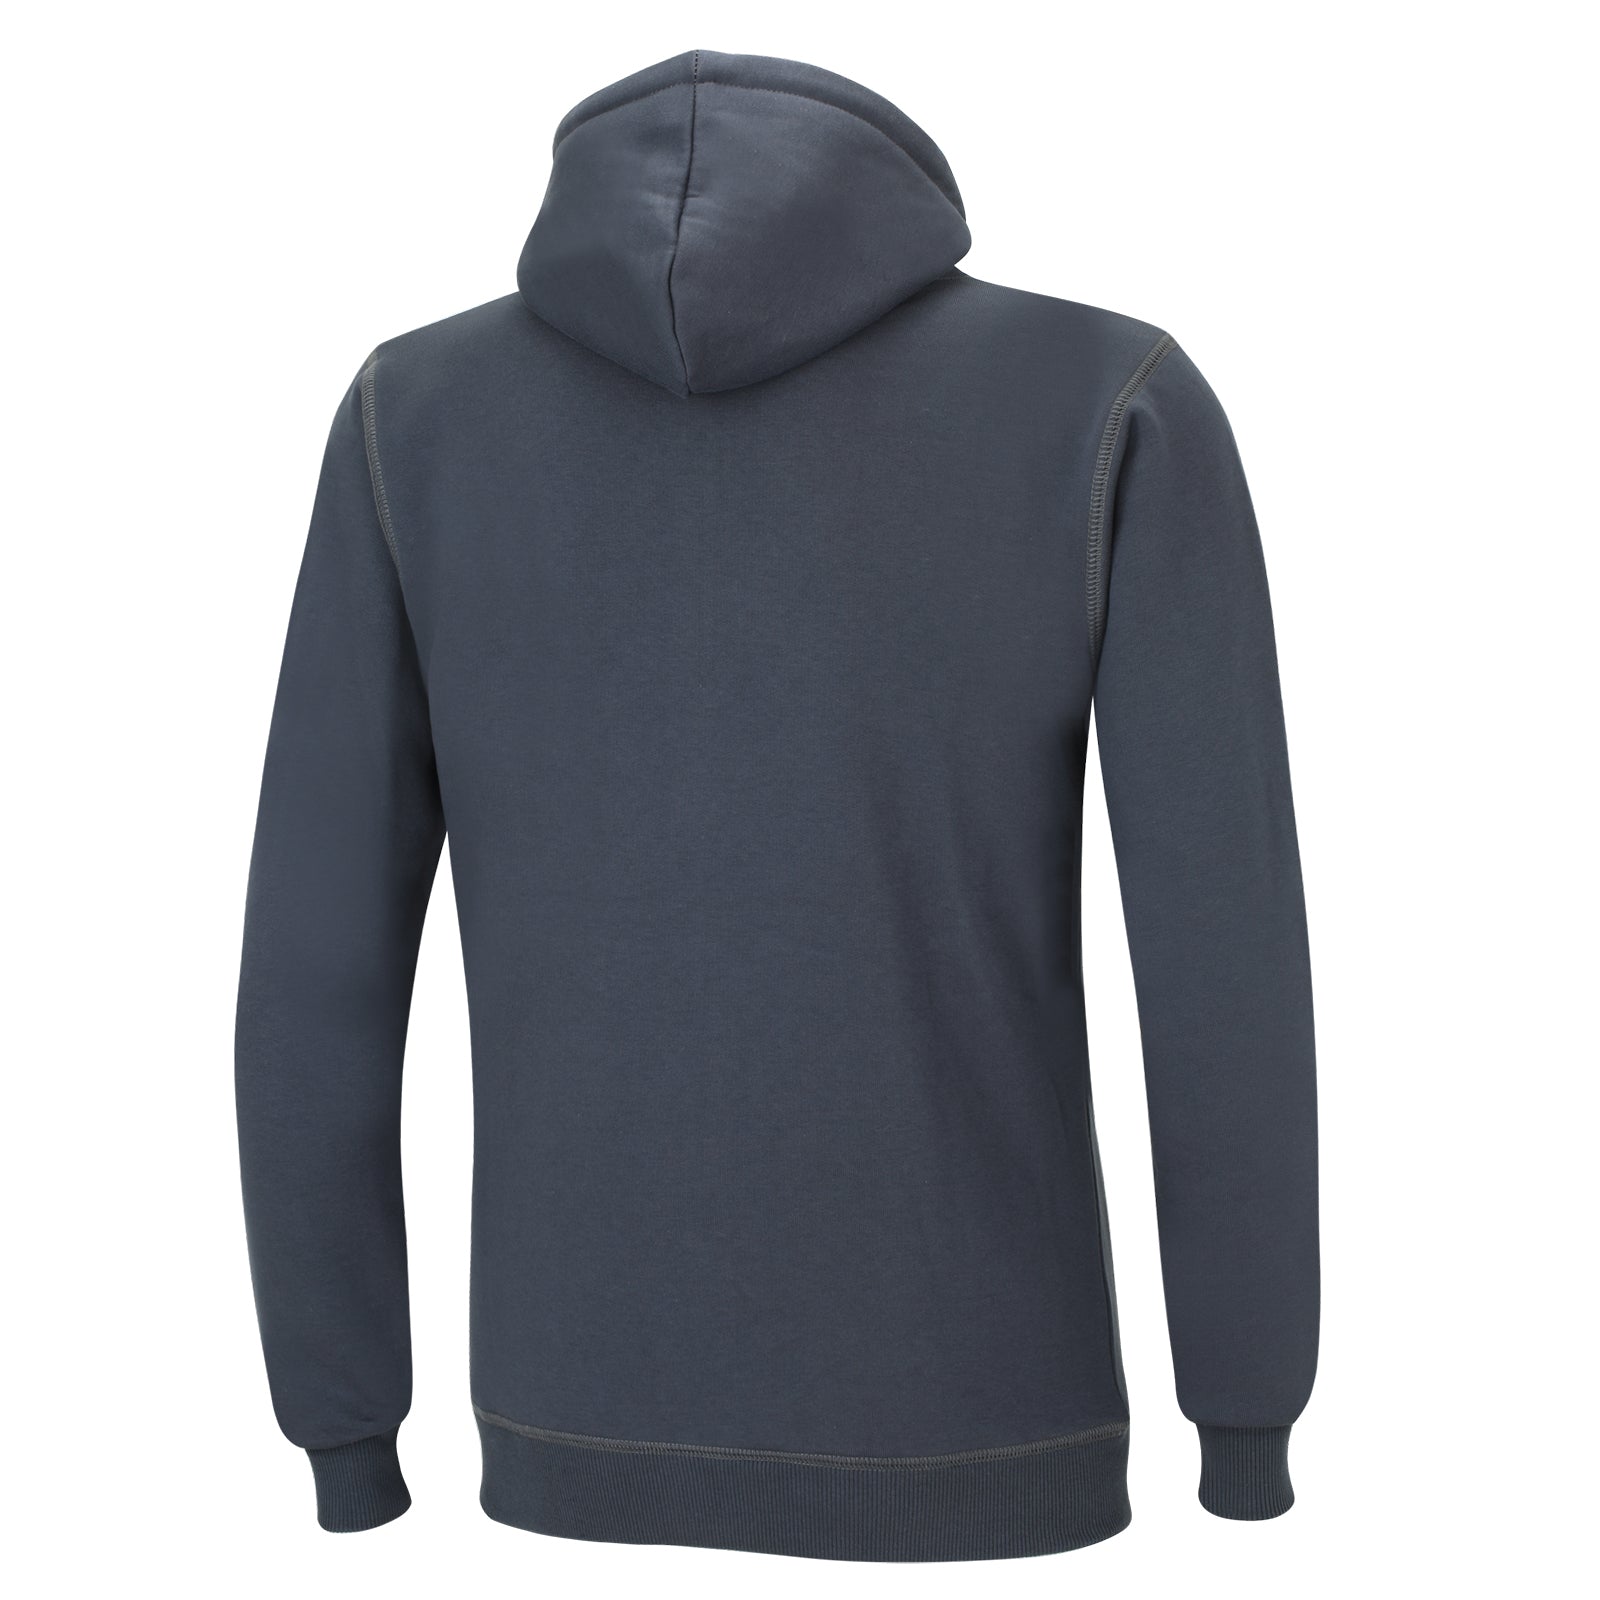 Sweatshirt-winter-thermo-pro-hoodie-sweater-herren-damen-s-m-l-xl-xxl-grau-schwarz-back